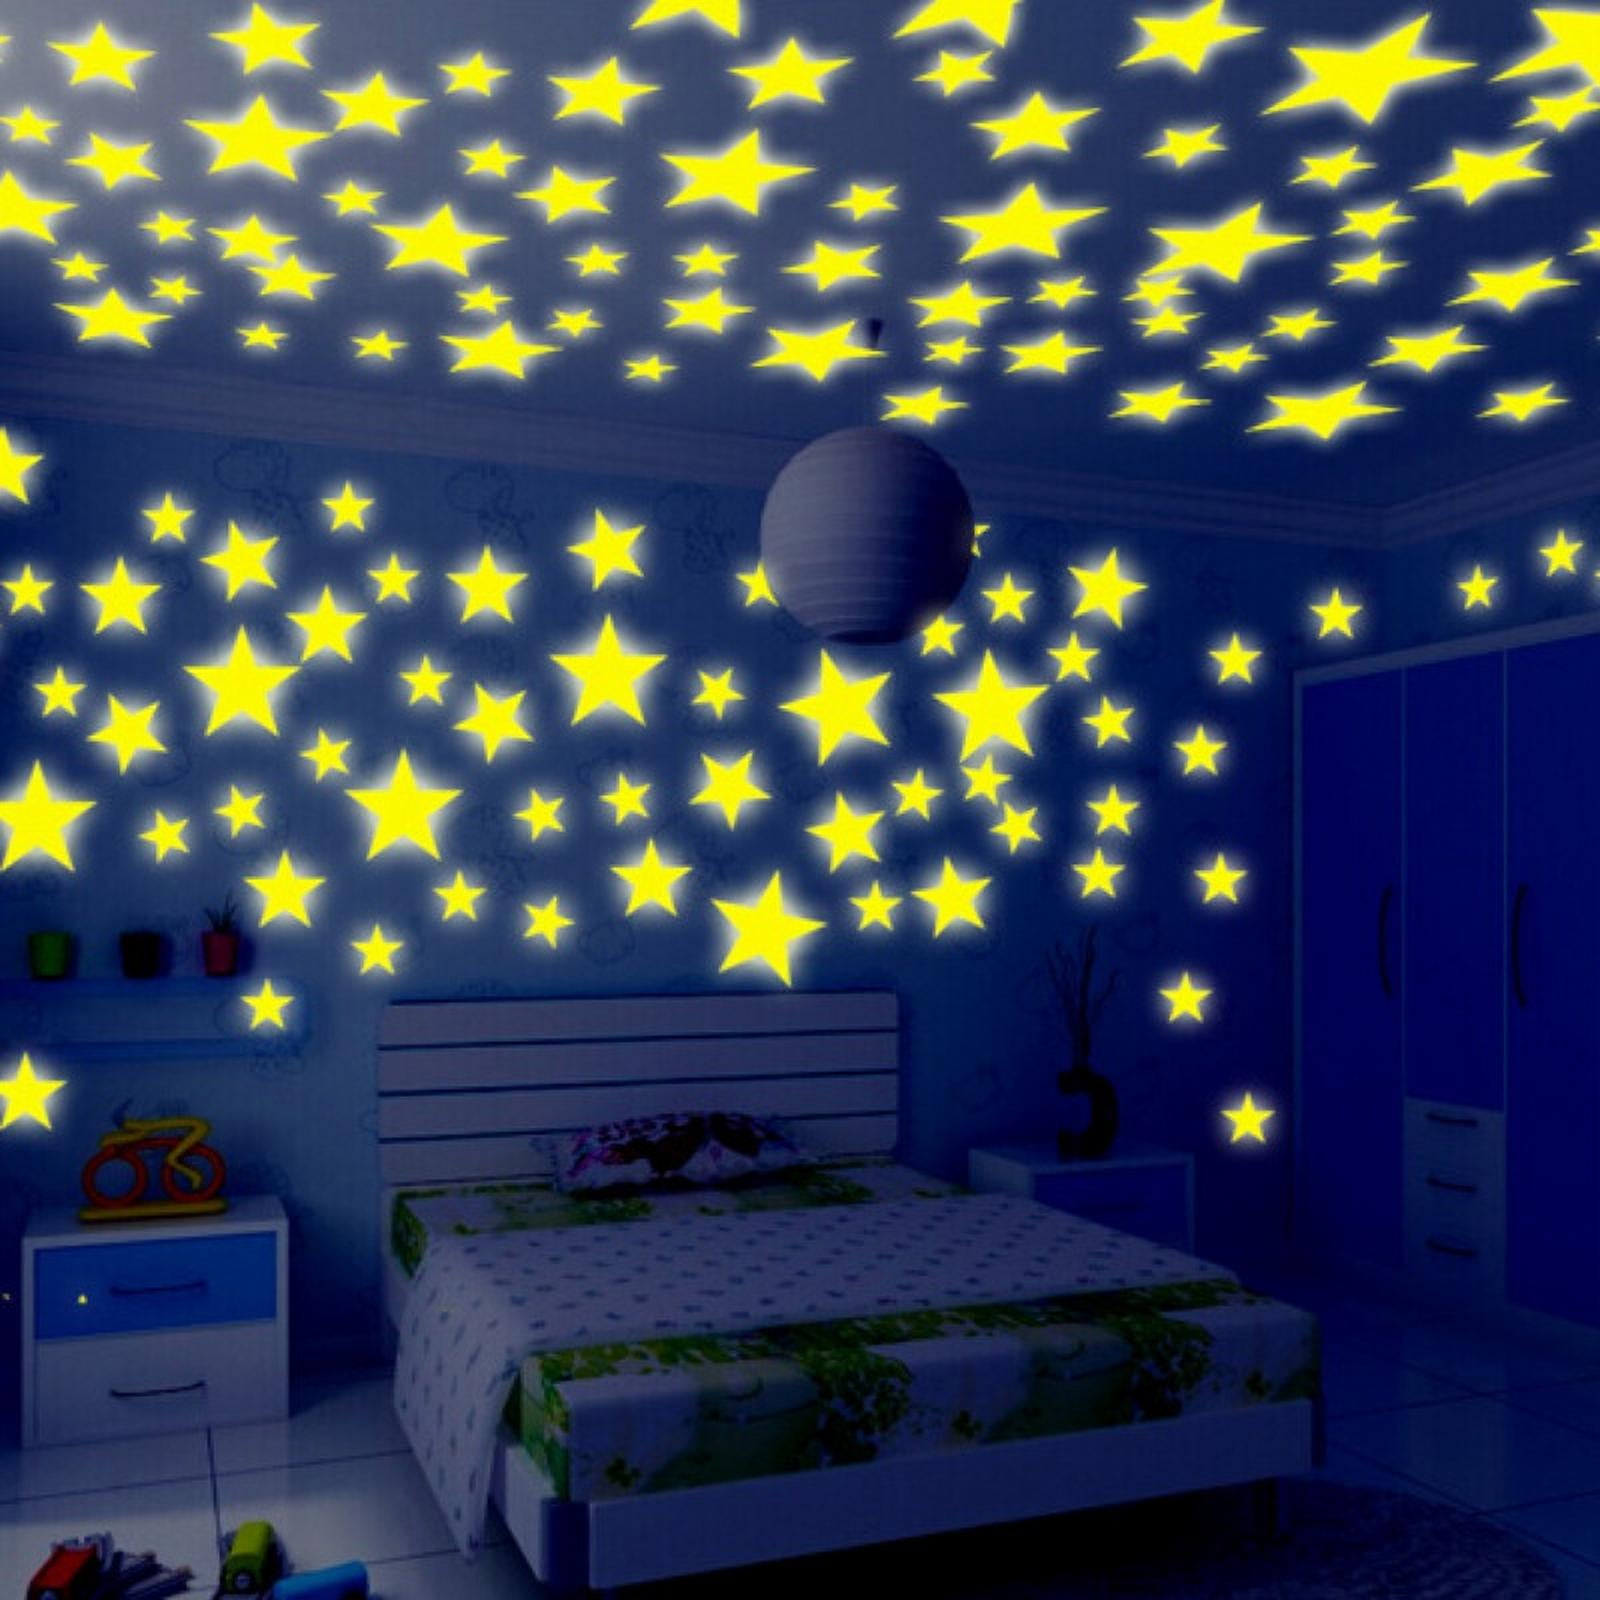 Kids Decal 3D Ceiling Glow In The Dark 100 Plastic Stars Blue Moon Wall Stickers 